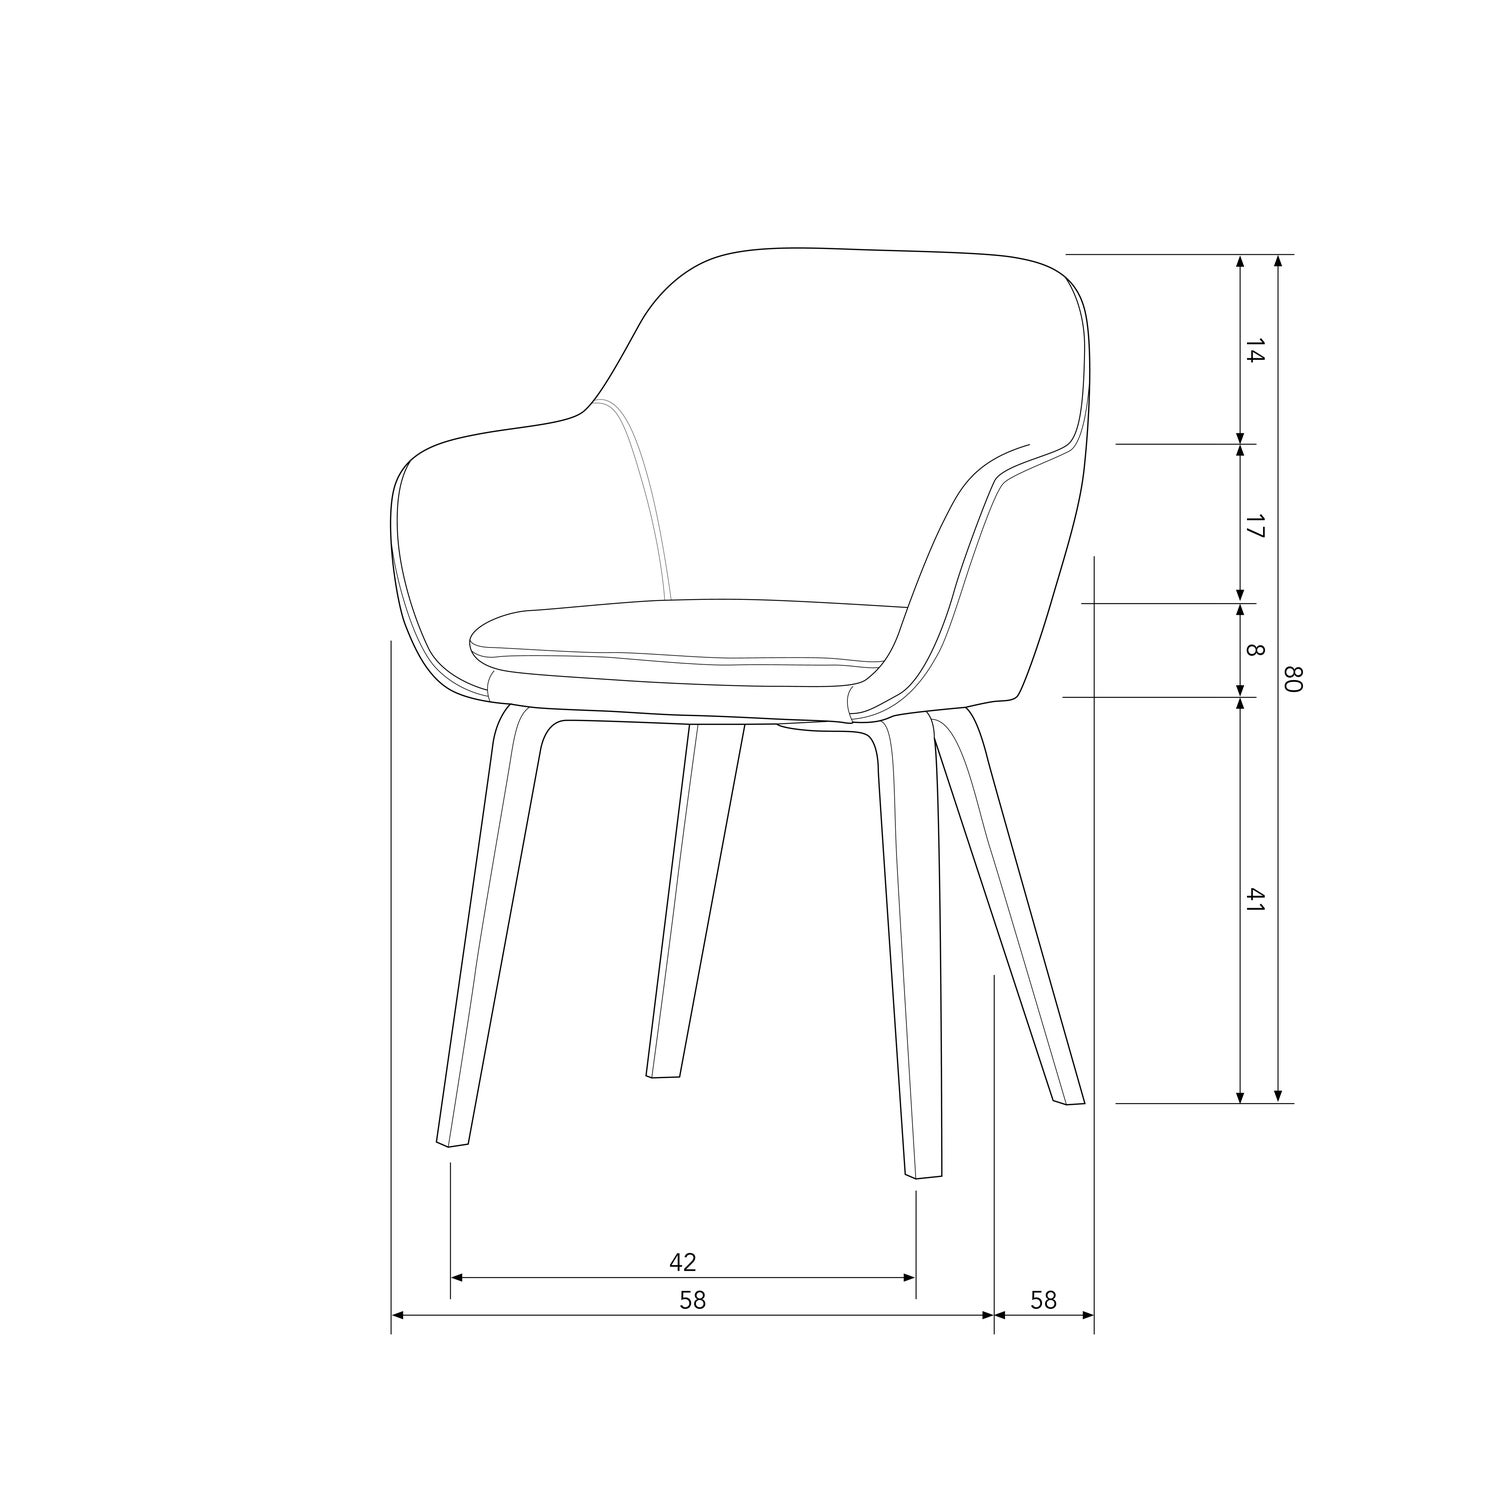 400476-Z-50_BT_Base_dining_chair.jpg?auto=webp&format=png&width=1500&height=1500